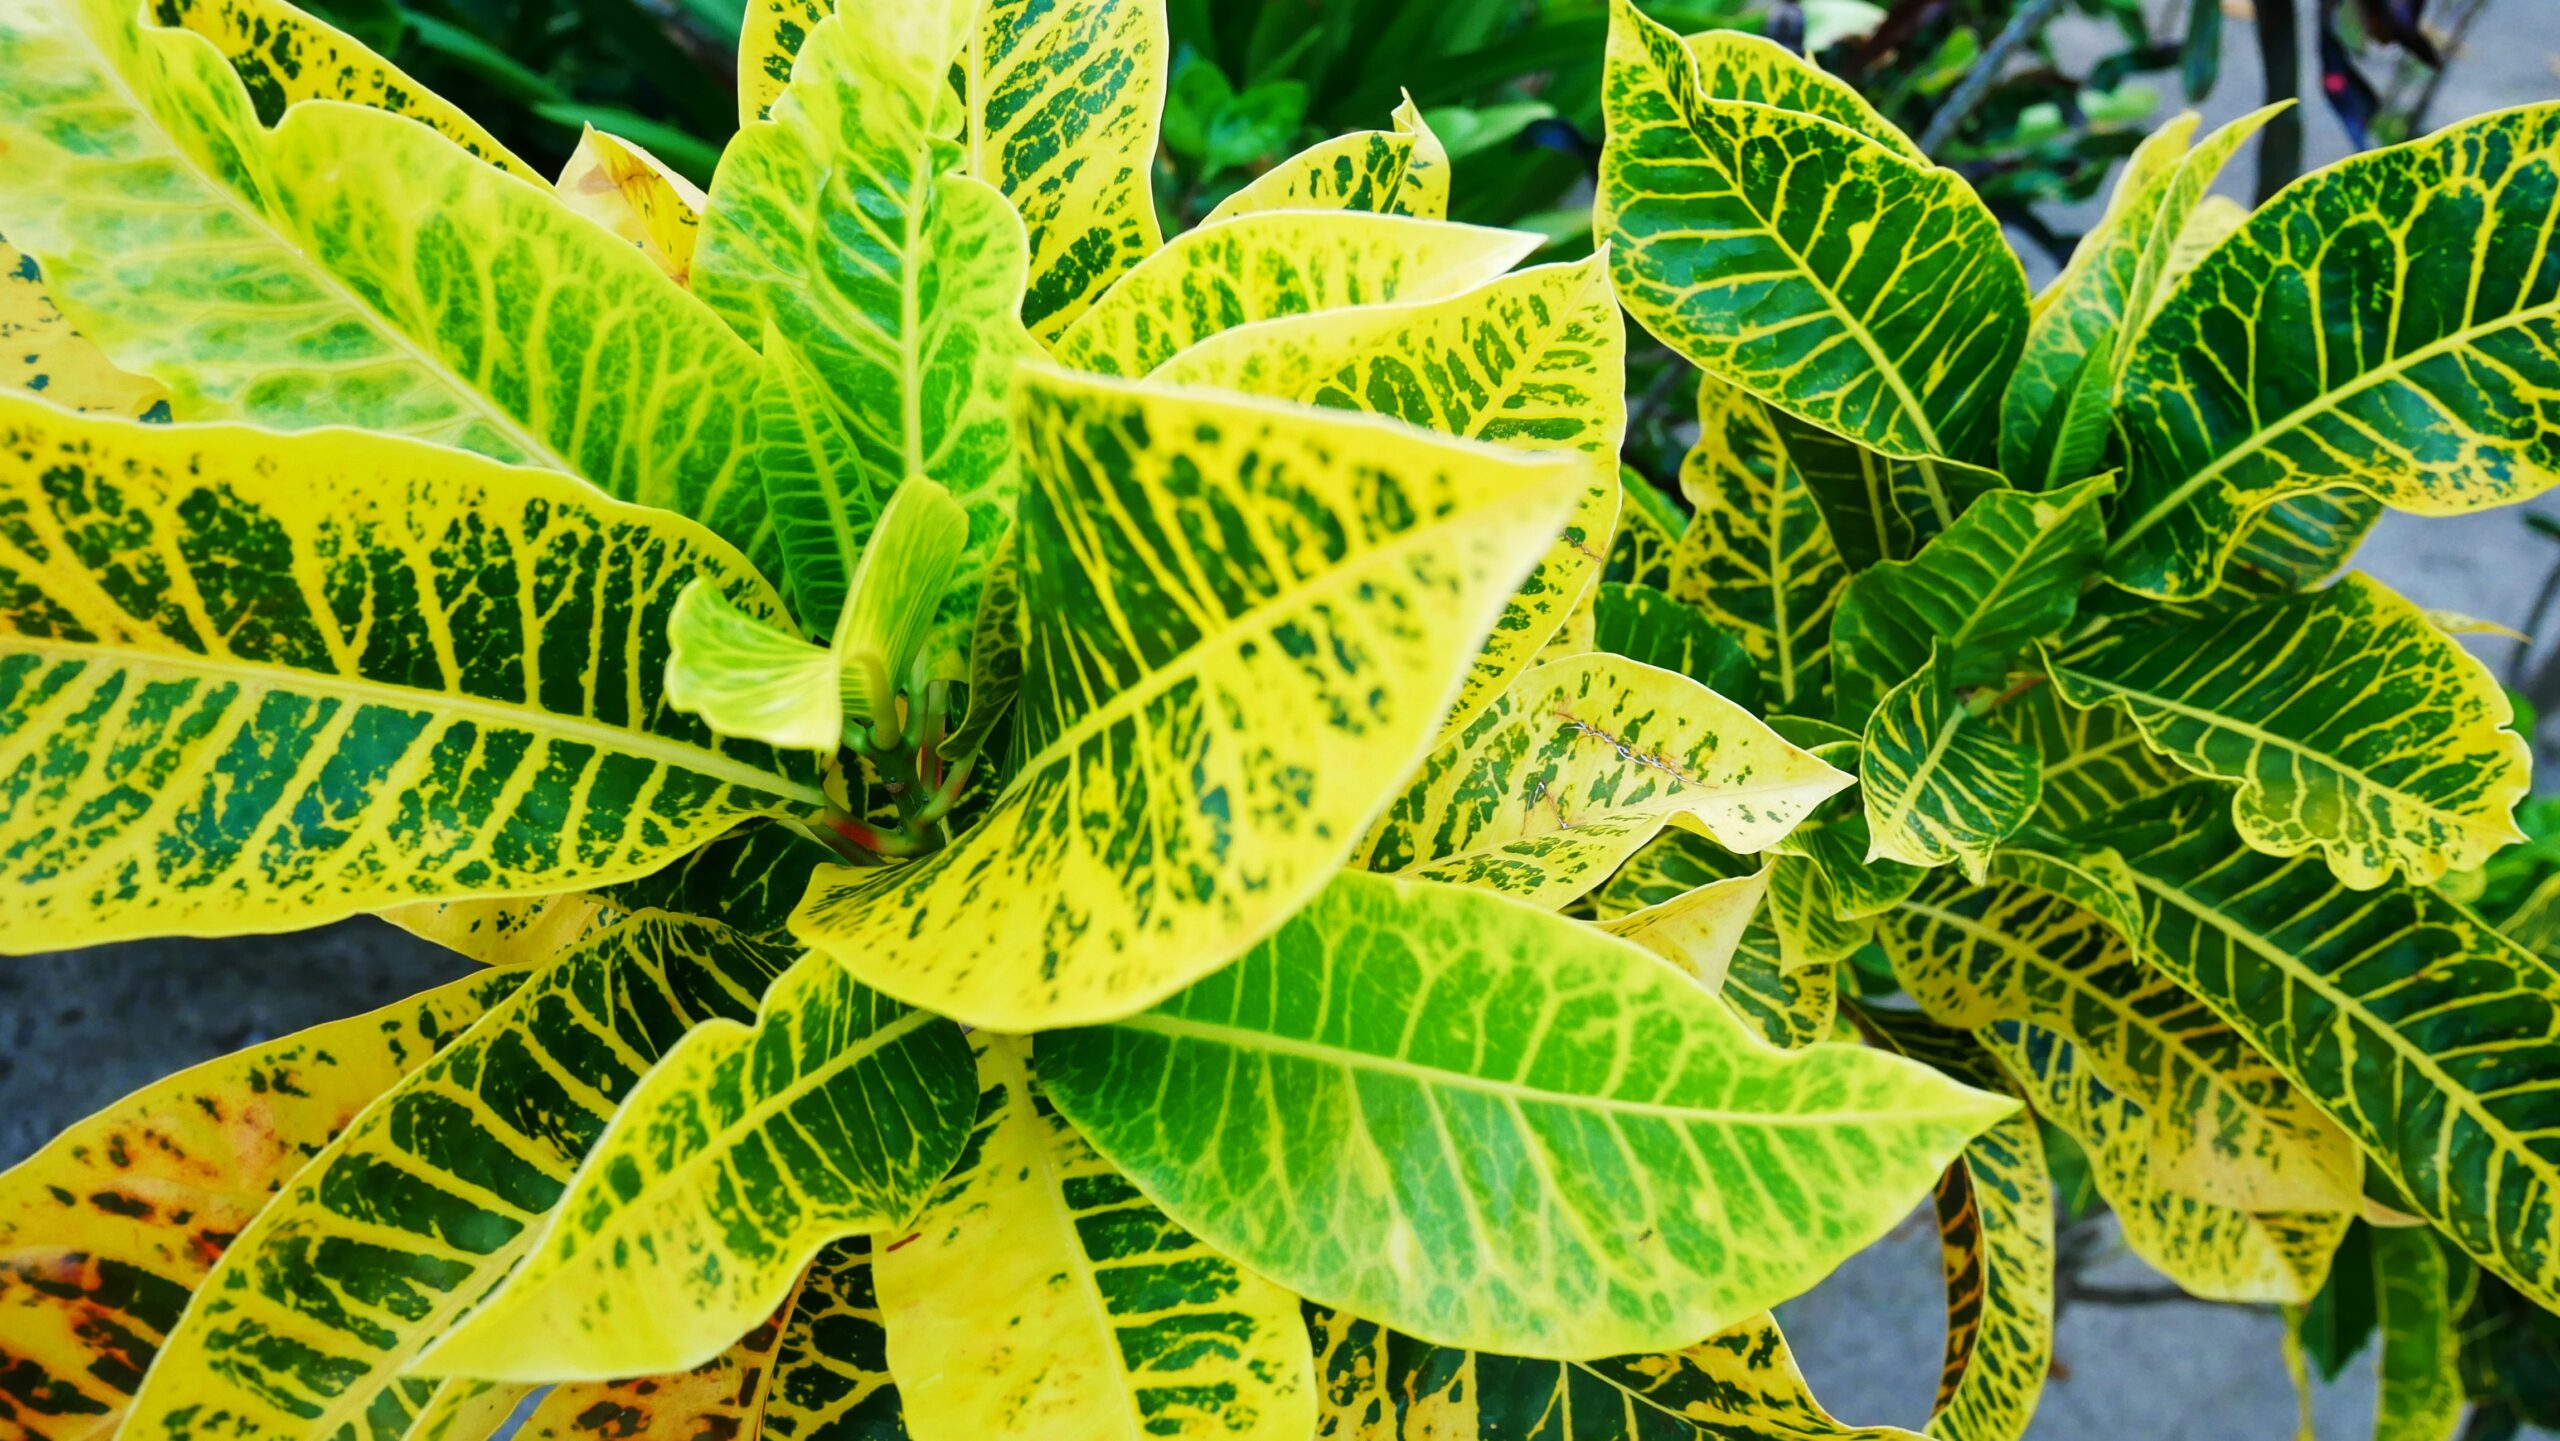 Croton Plants : How to grow and take Care